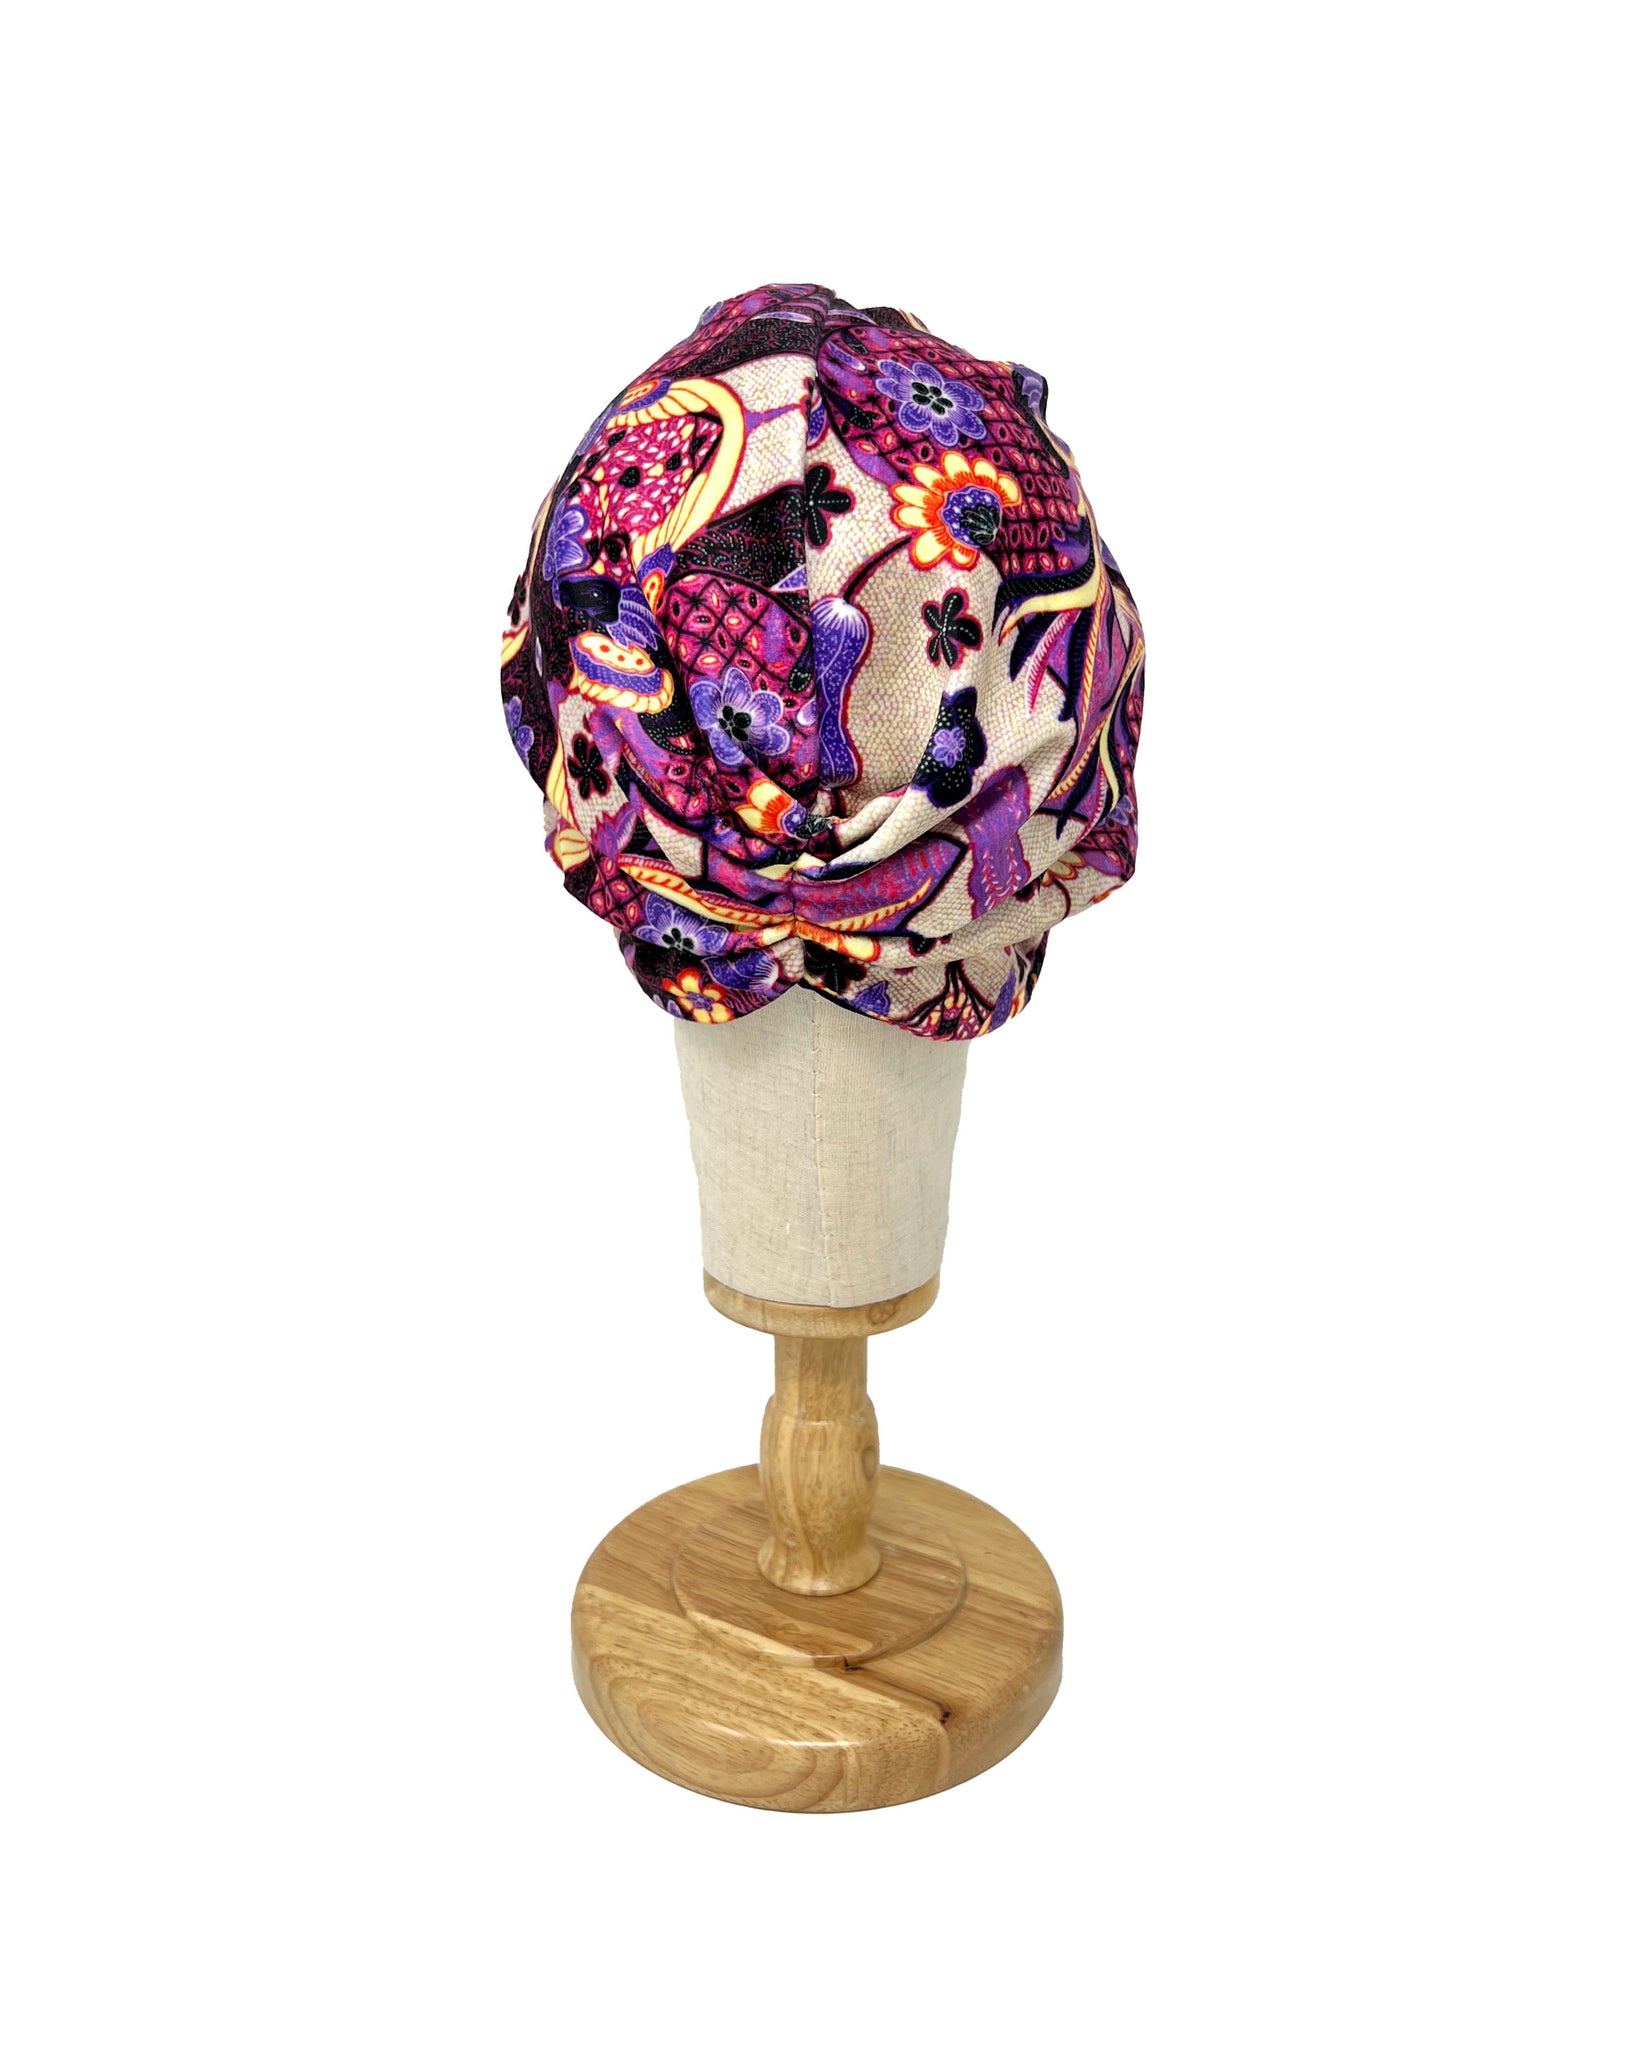 "Rachel" white and violet paisley cotton velvet turban